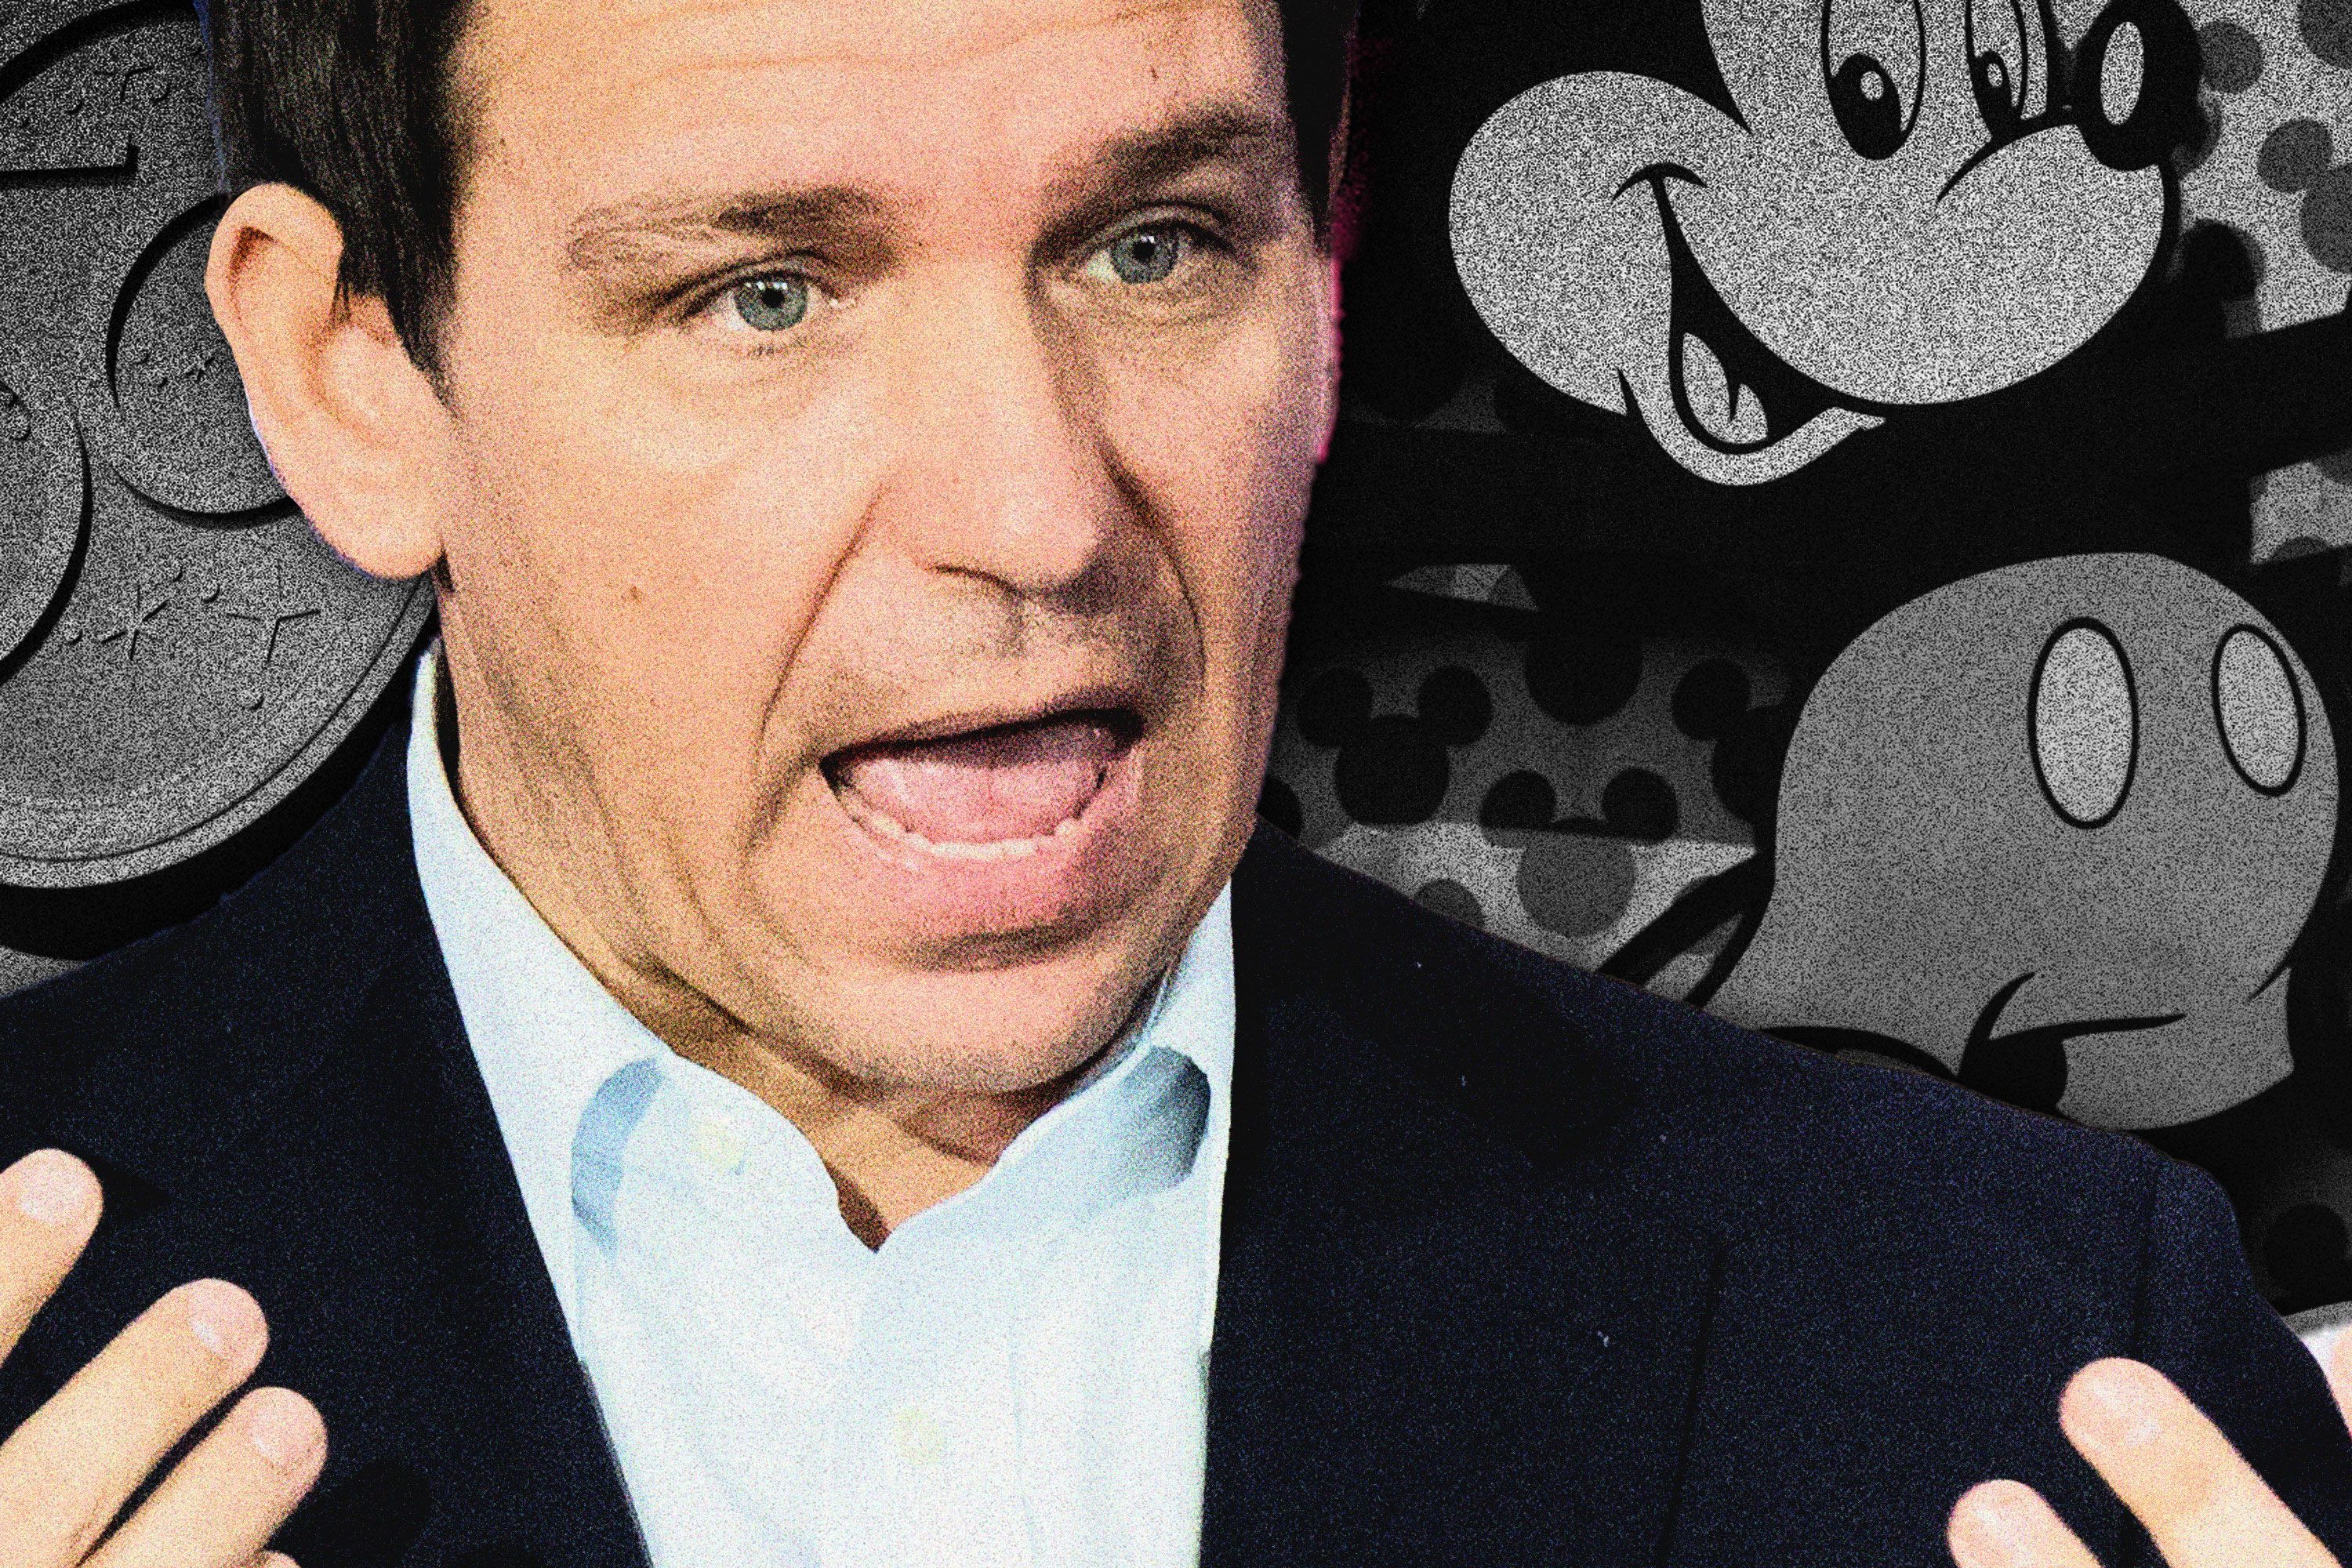 Disney Should Thank Ron DeSantis for His Big Dumb Mouth